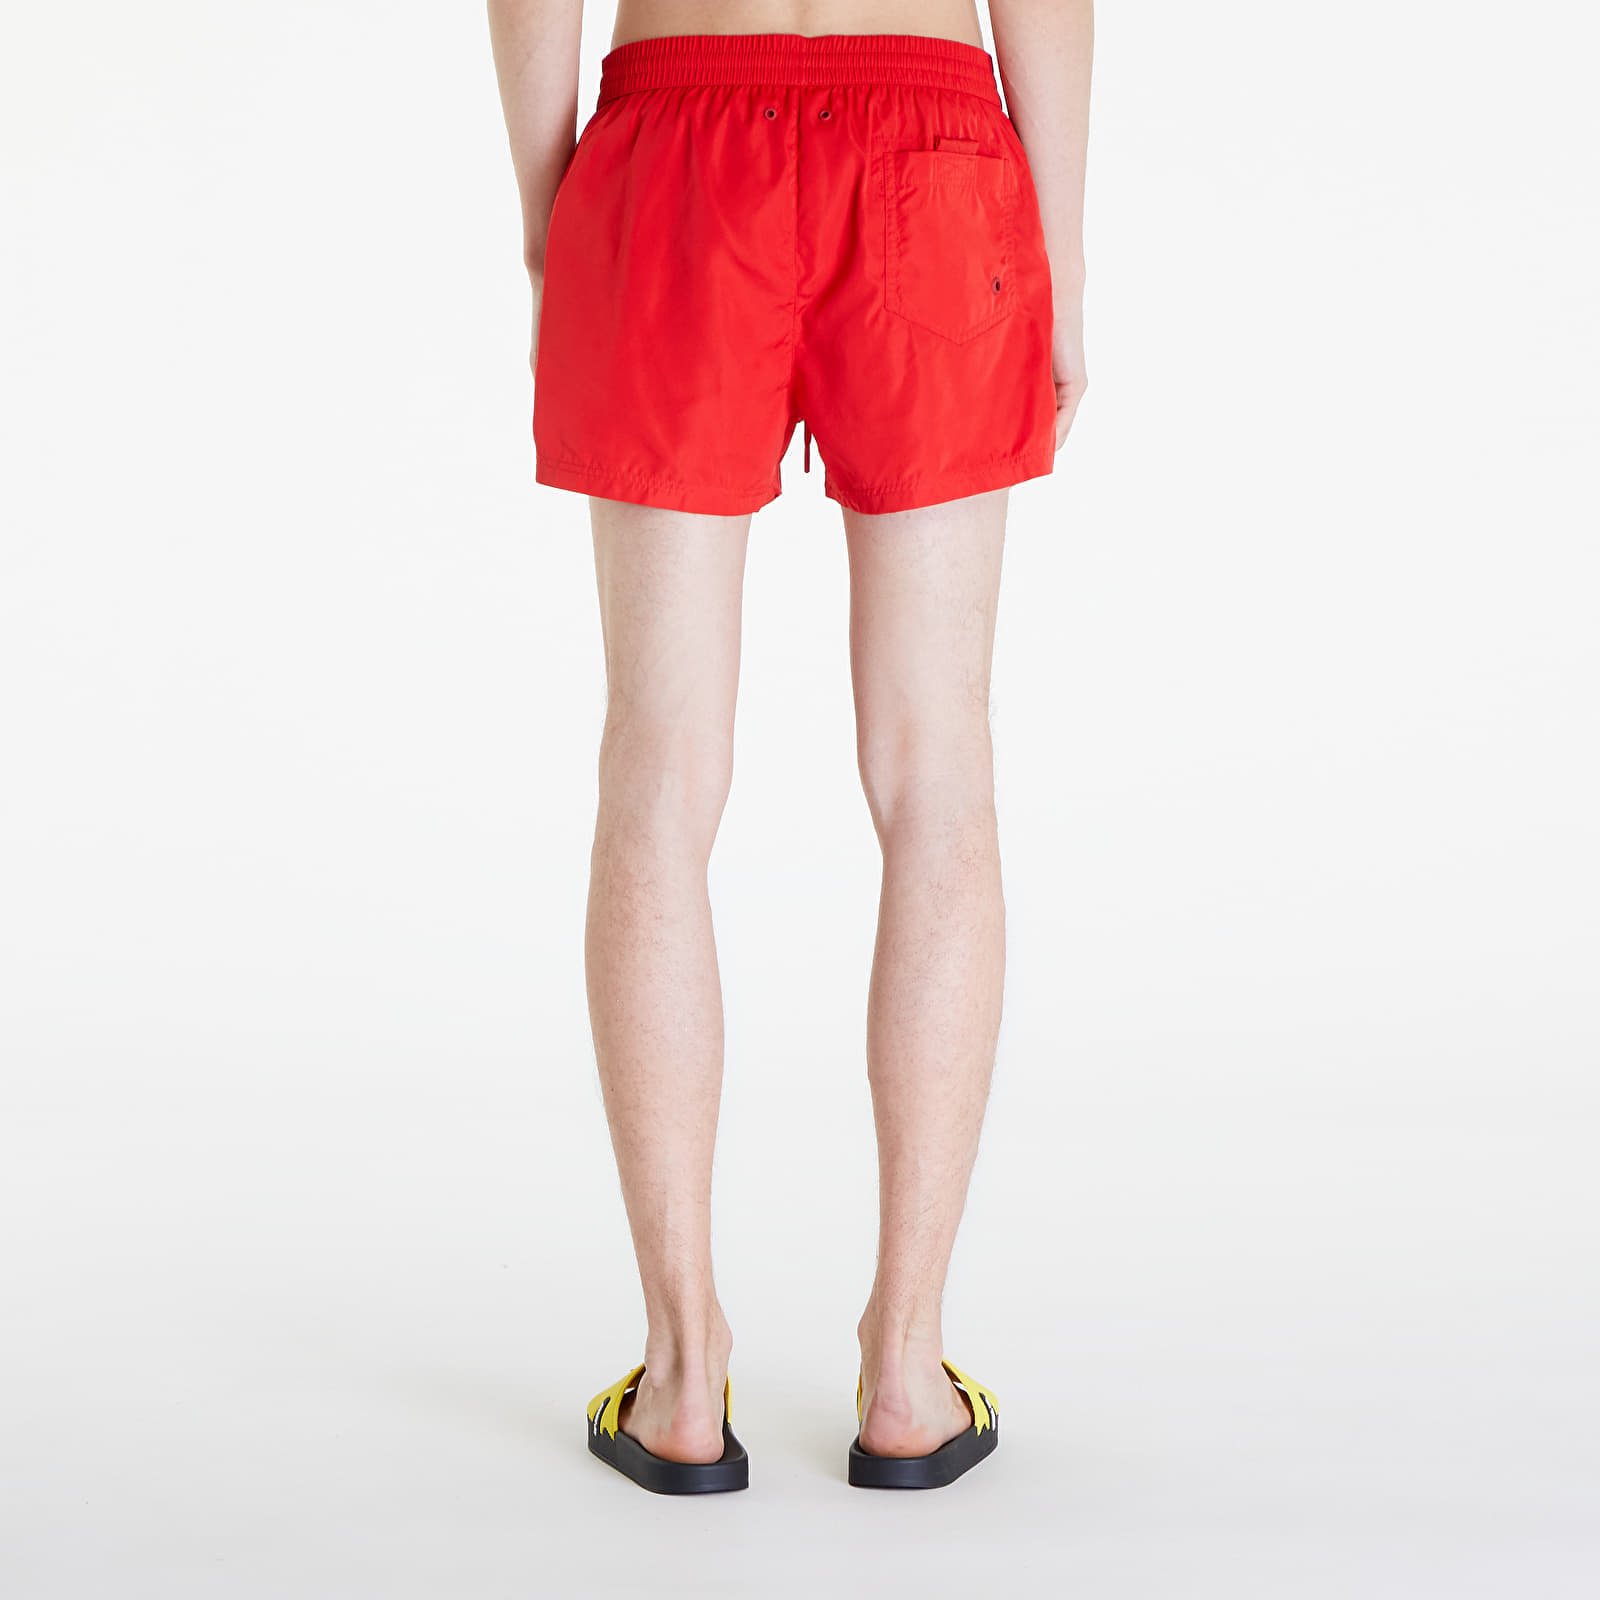 Bmbx-Mario-34 Boxer-Shorts Red